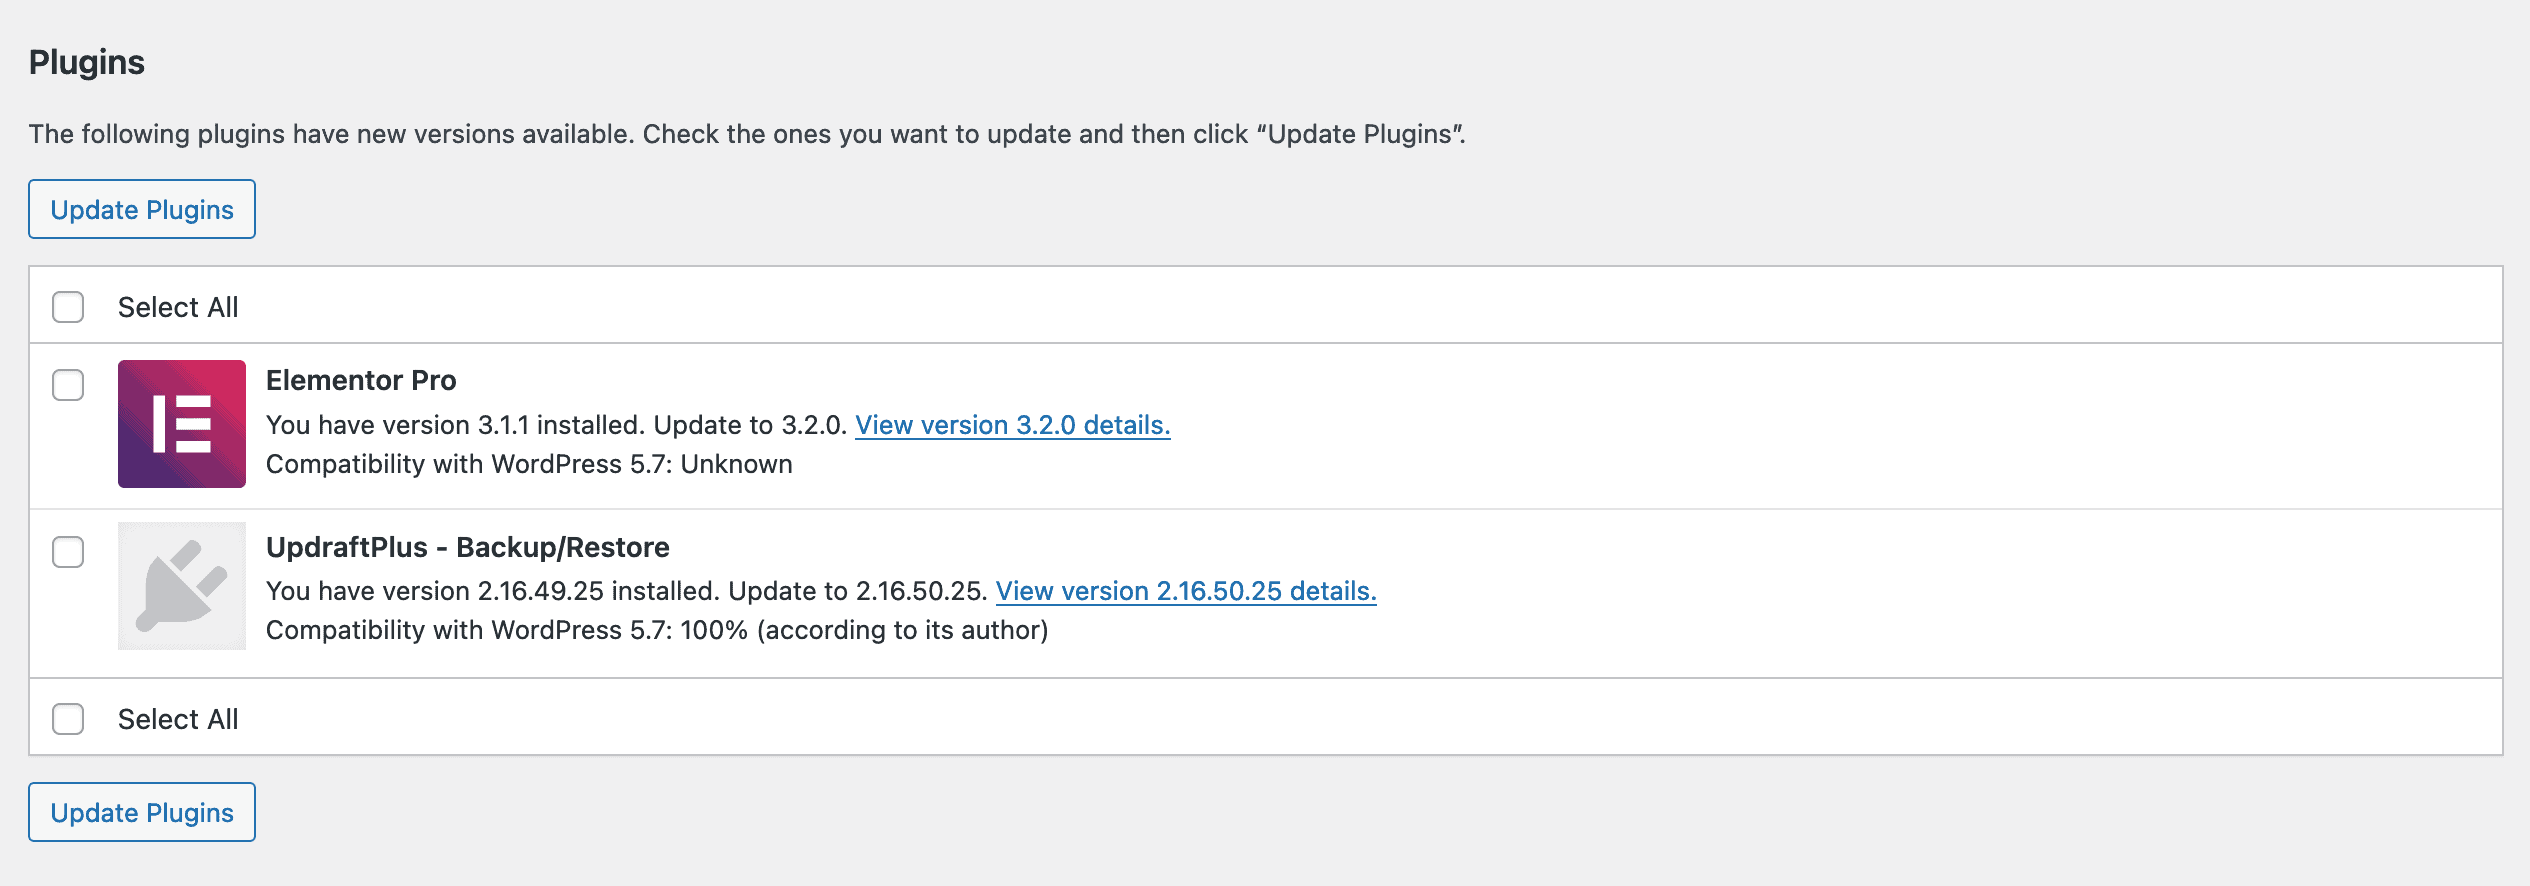 Plugins to update on the dashboard under updates